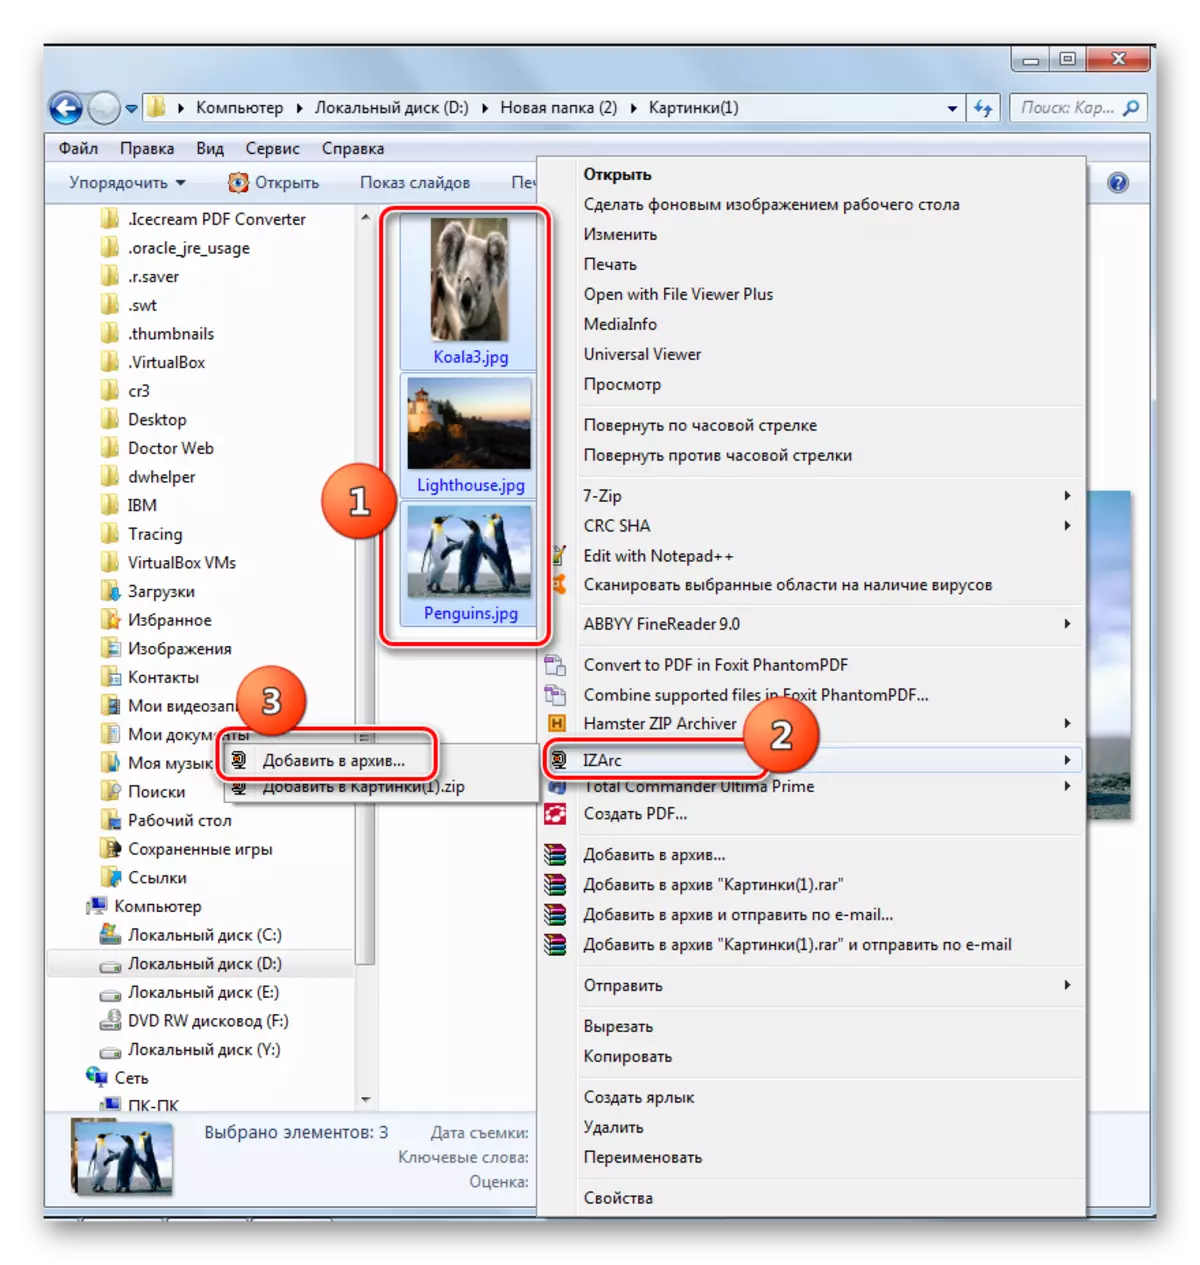 Inzibacyuho Kurema Zip Archive Binyuze muri menu ya Windows Explorer muri Izarc